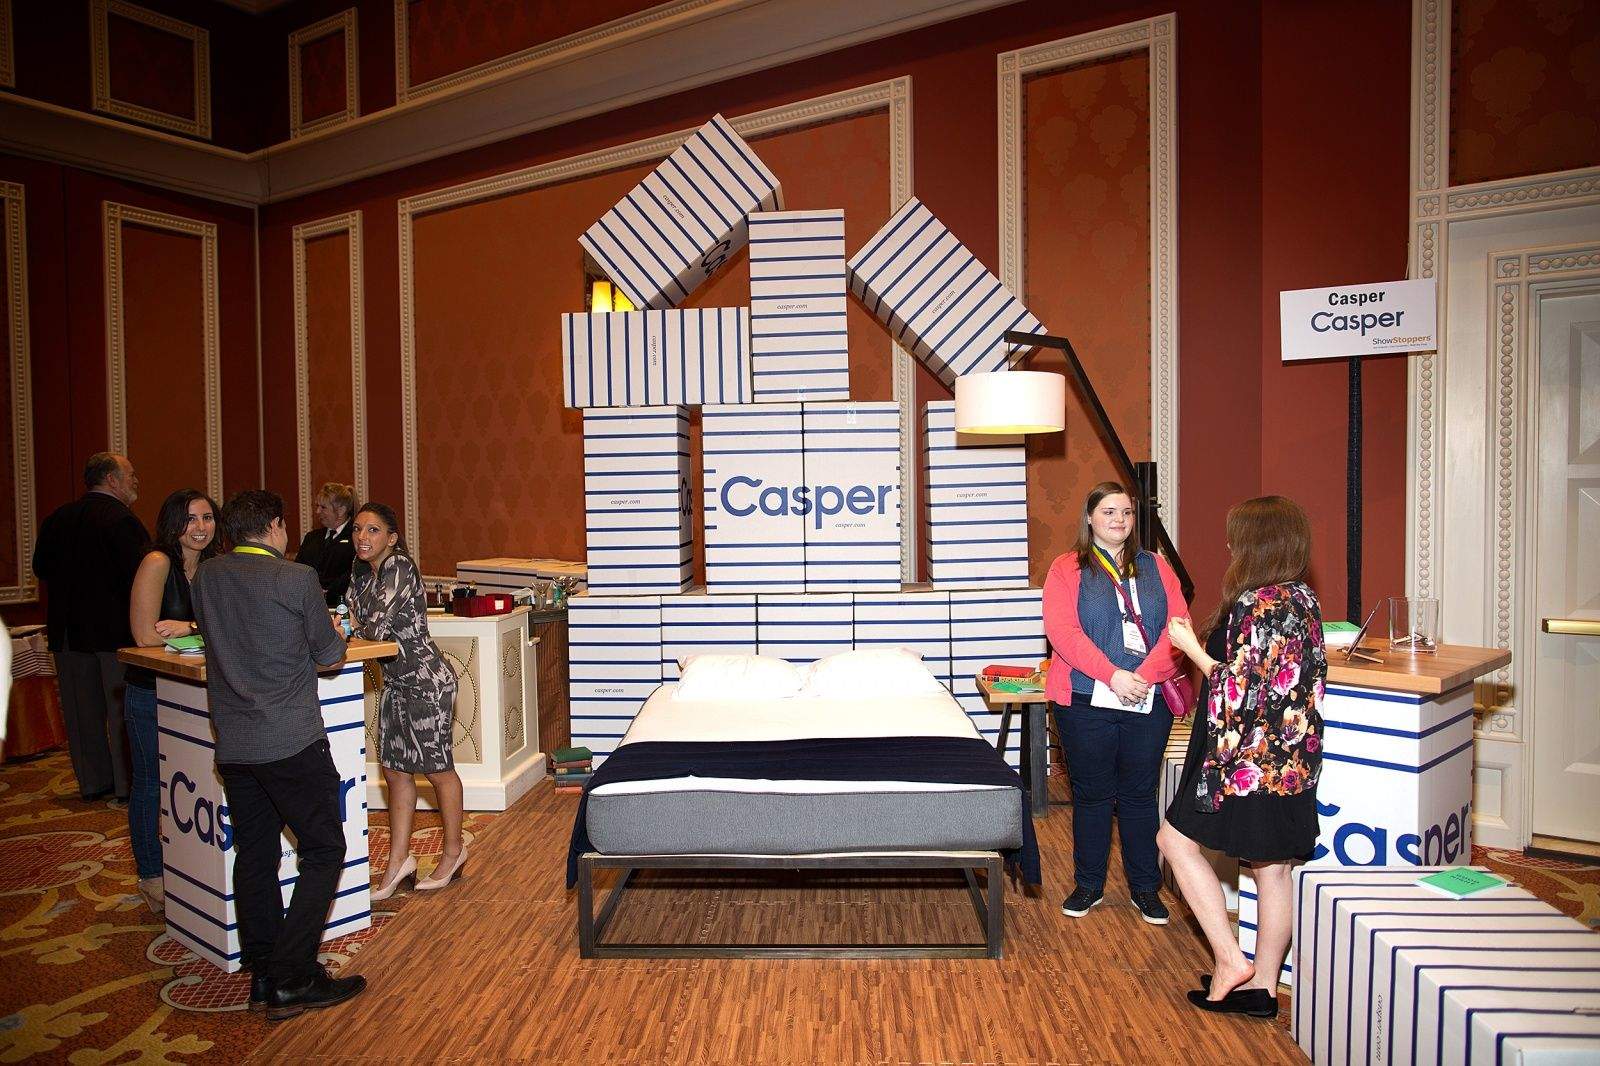 Casper beds come in boxes. Photo: Jim Merithew/Cult of Mac